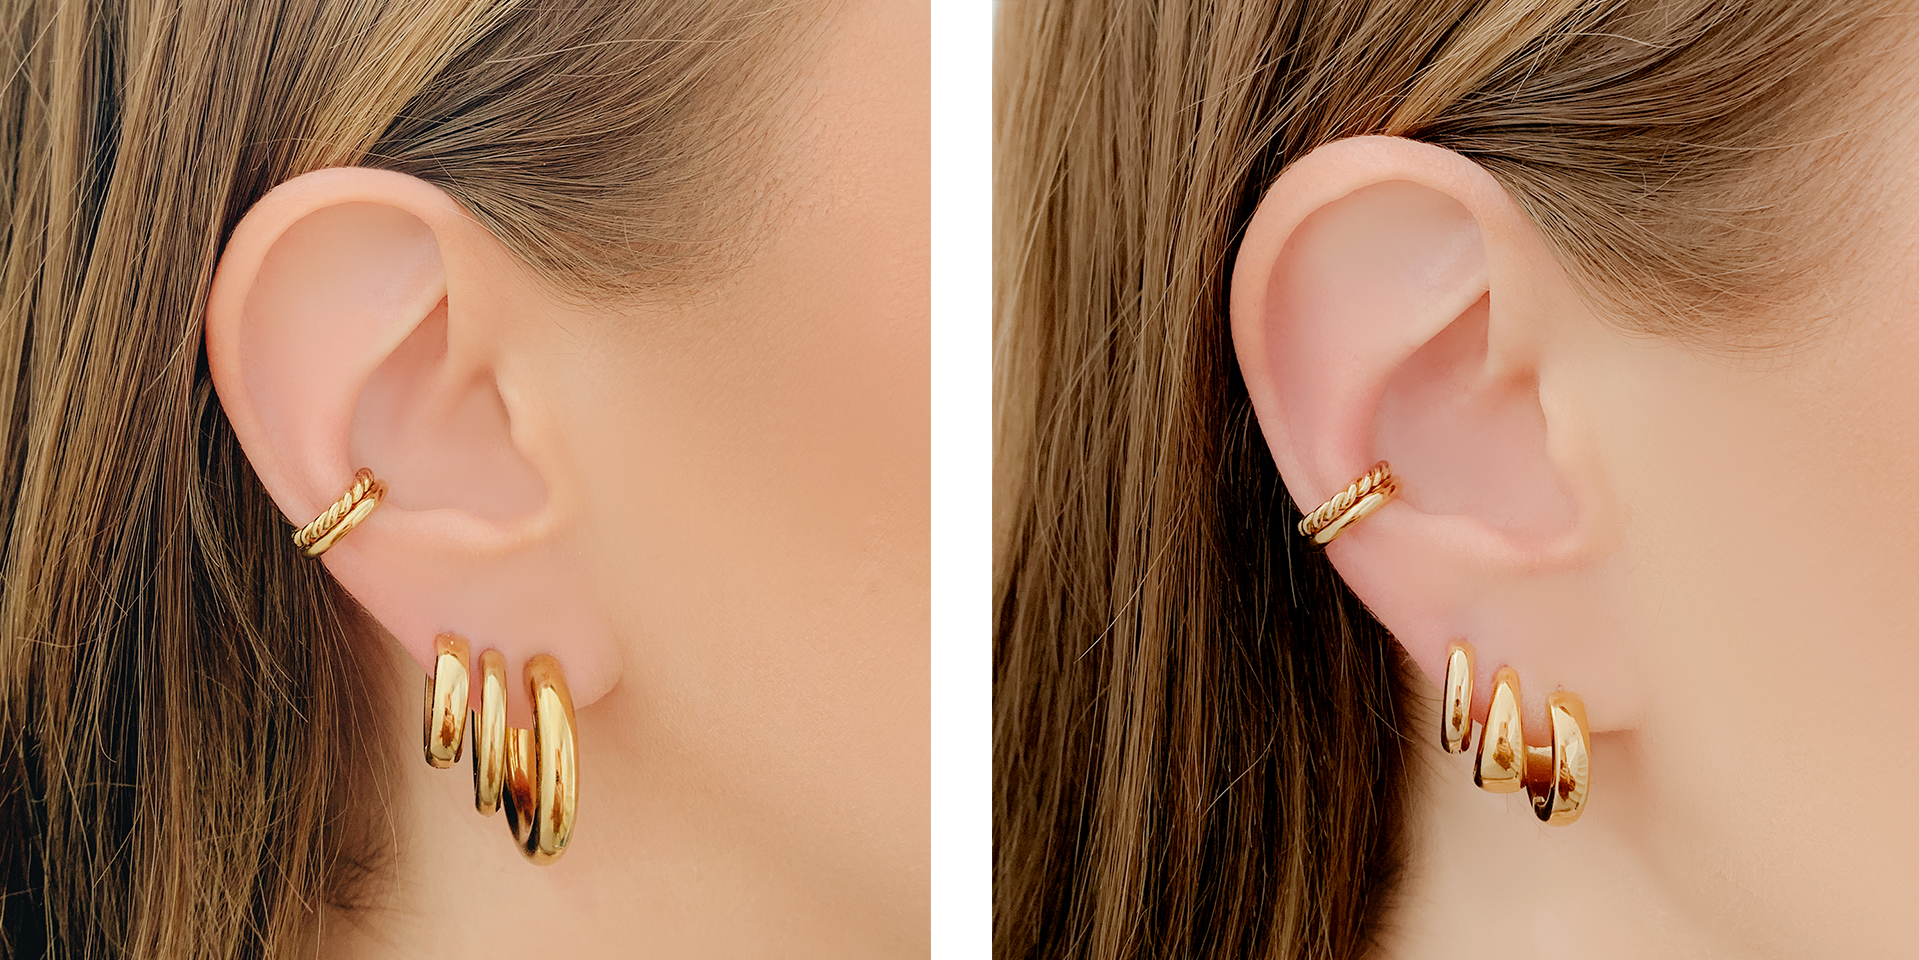 Sugar Blossom earrings three piercings idea